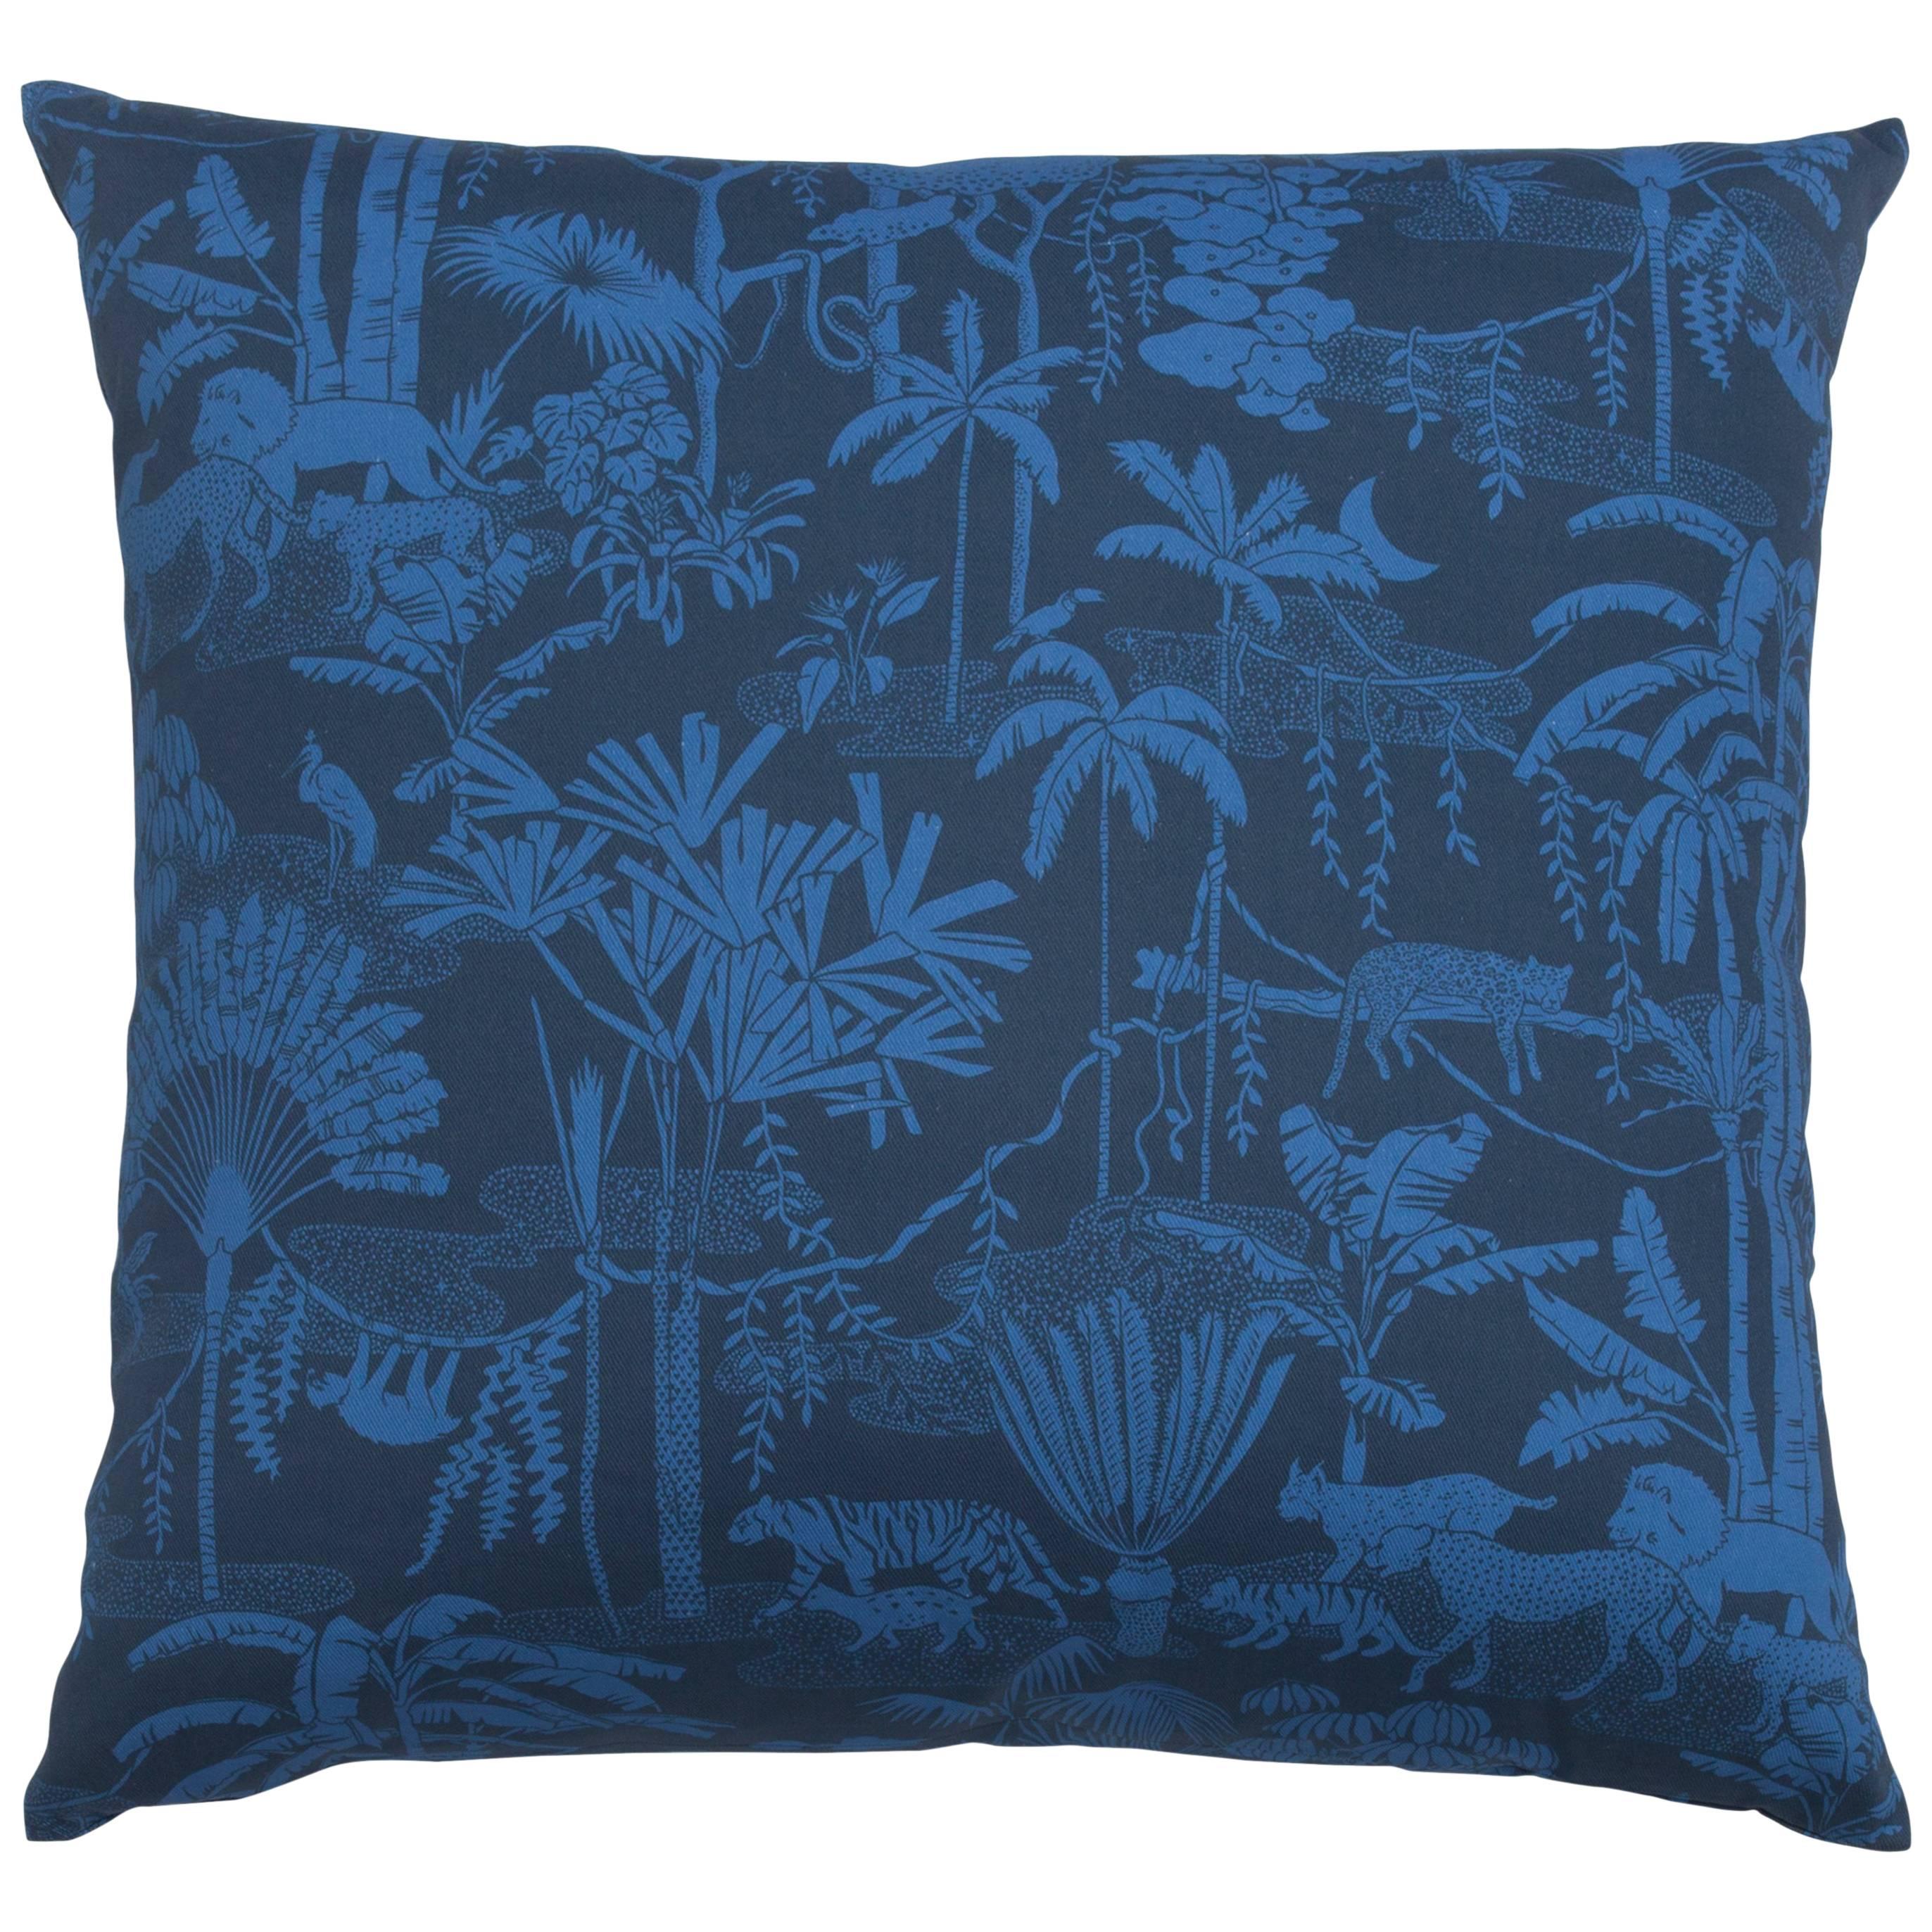 Jungle Dream Pillow in Color Mediterranean 'Cobalt Blue on Navy Blue'